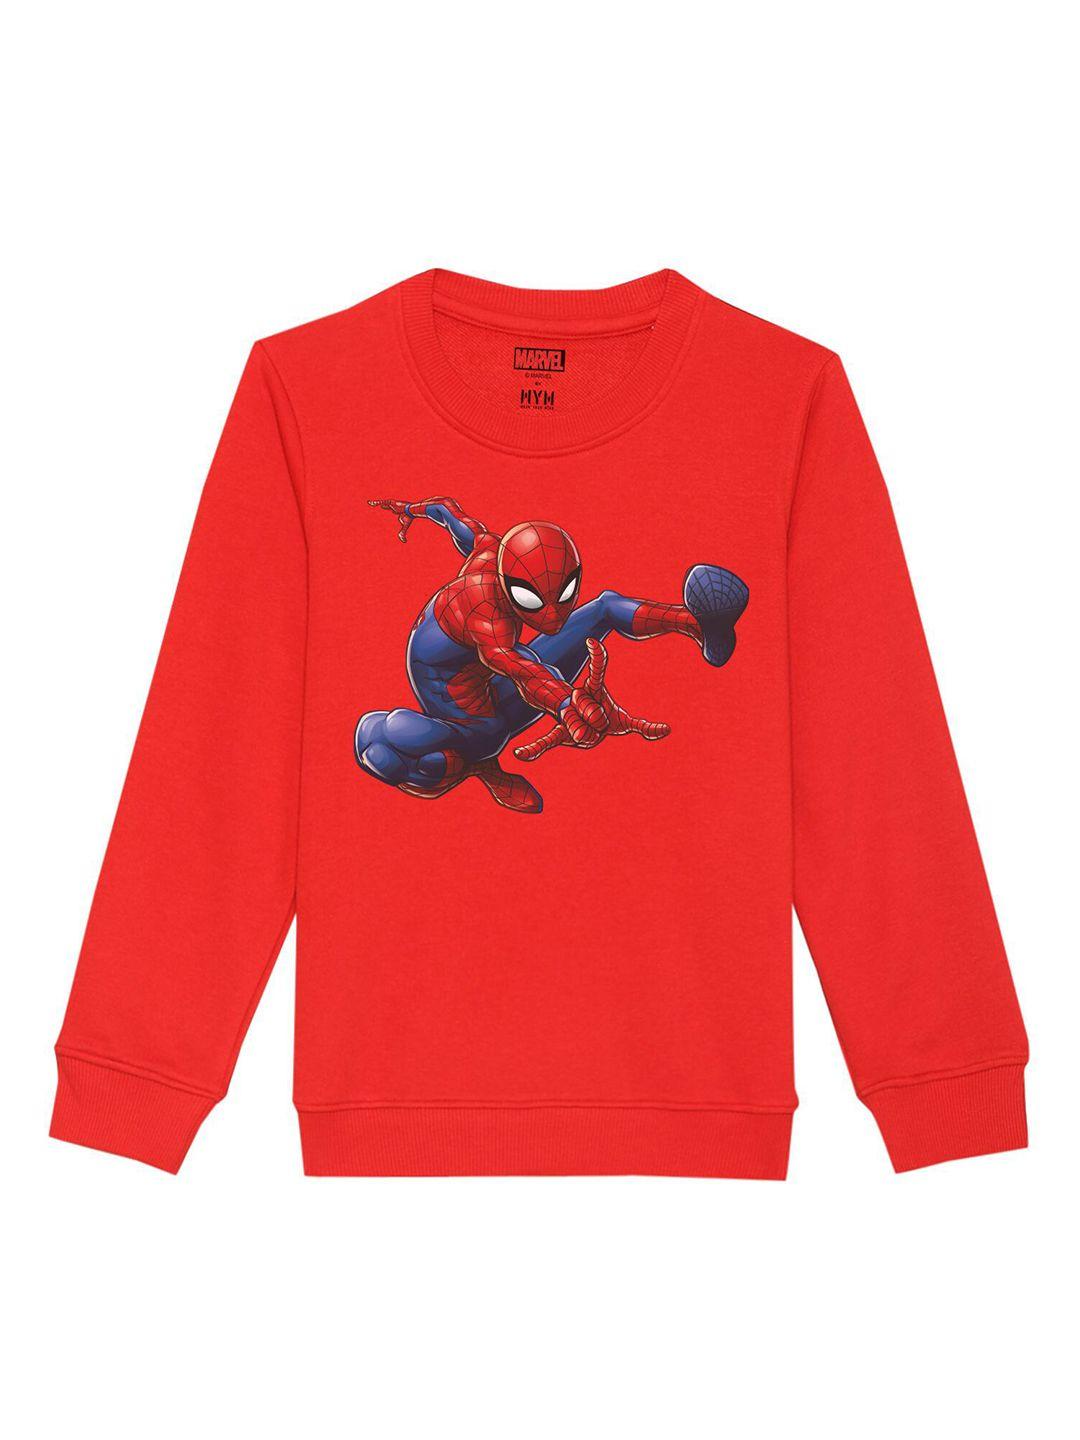 marvel by wear your mind kids red printed sweatshirt